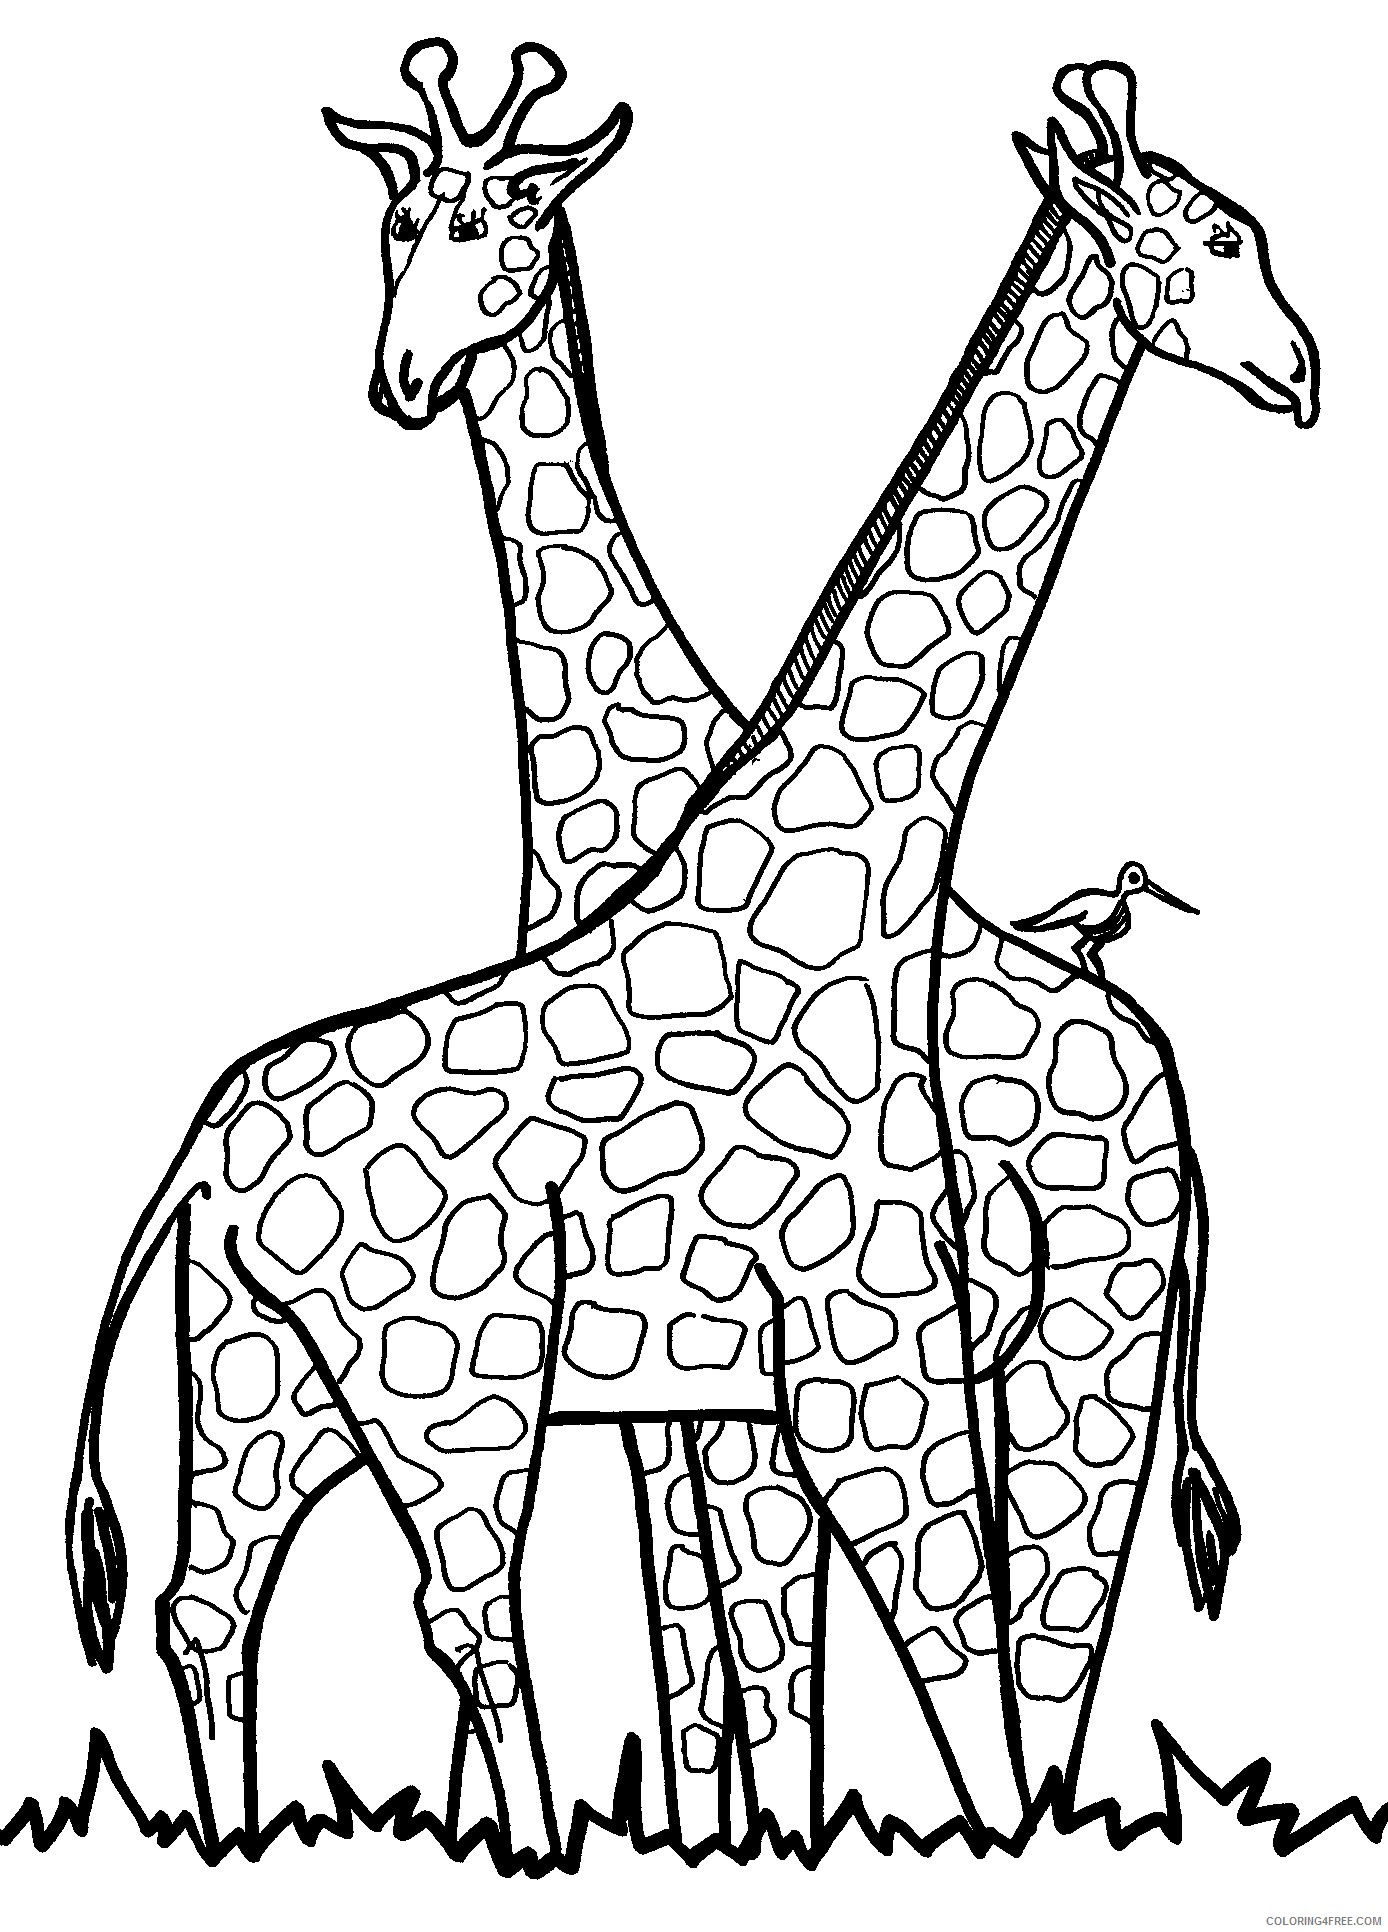 Giraffe Coloring Pages Animal Printable Sheets of a Giraffe 2021 2387 Coloring4free